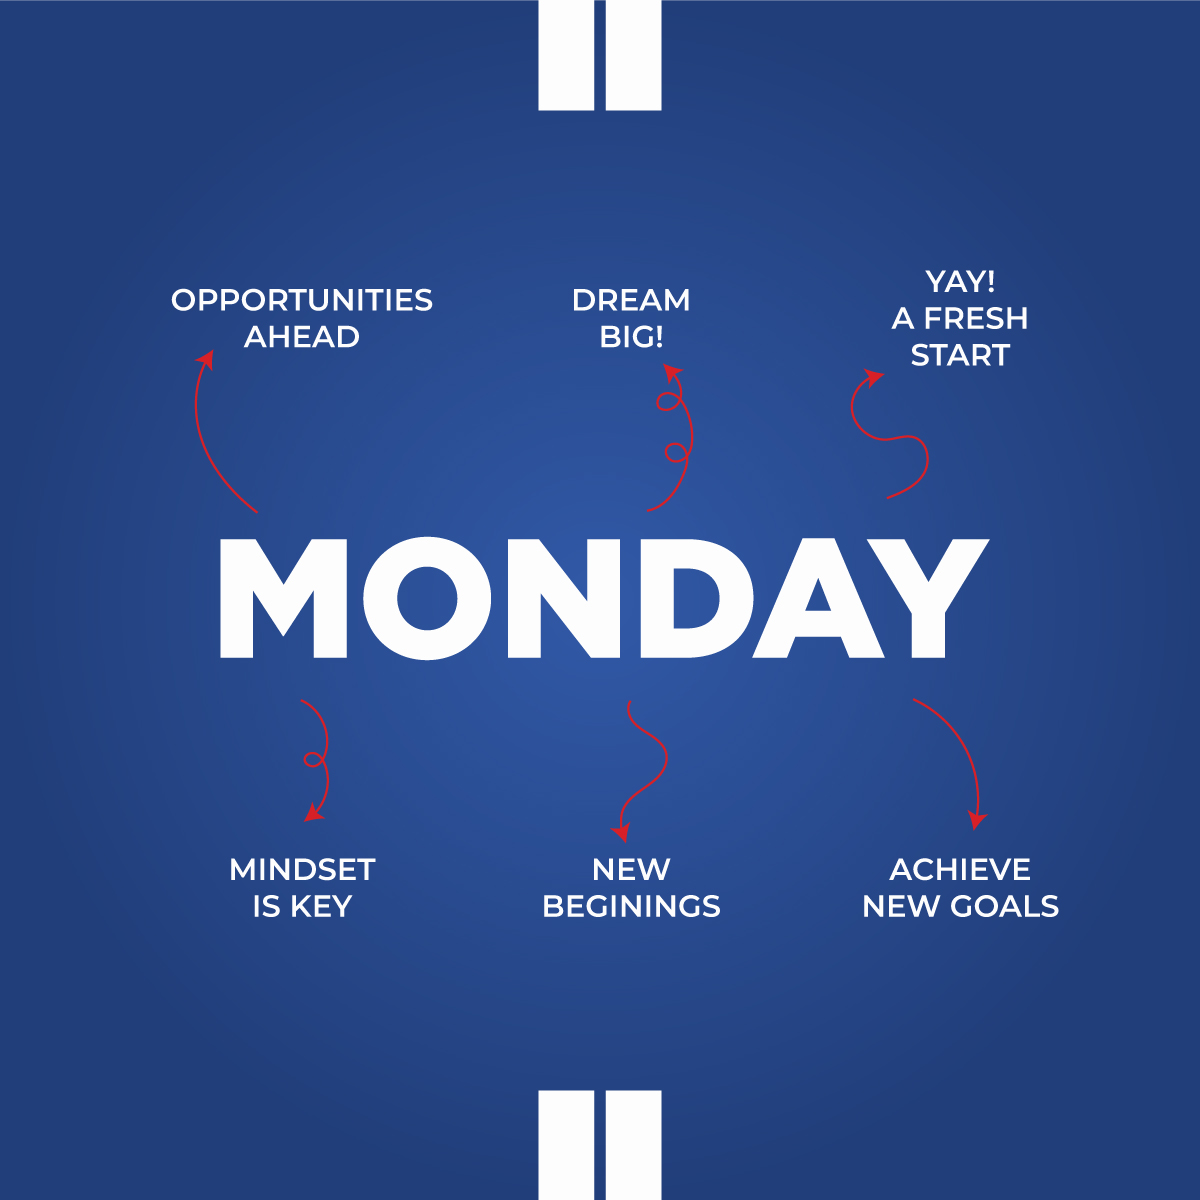 Turn your Monday blues into Monday hues of success.
.
.
.
.
#MondayMotivation #MotivationMonday #MondayInspiration #MondayGoals #NewWeekNewGoals #StayPositive #BelieveAndAchieve